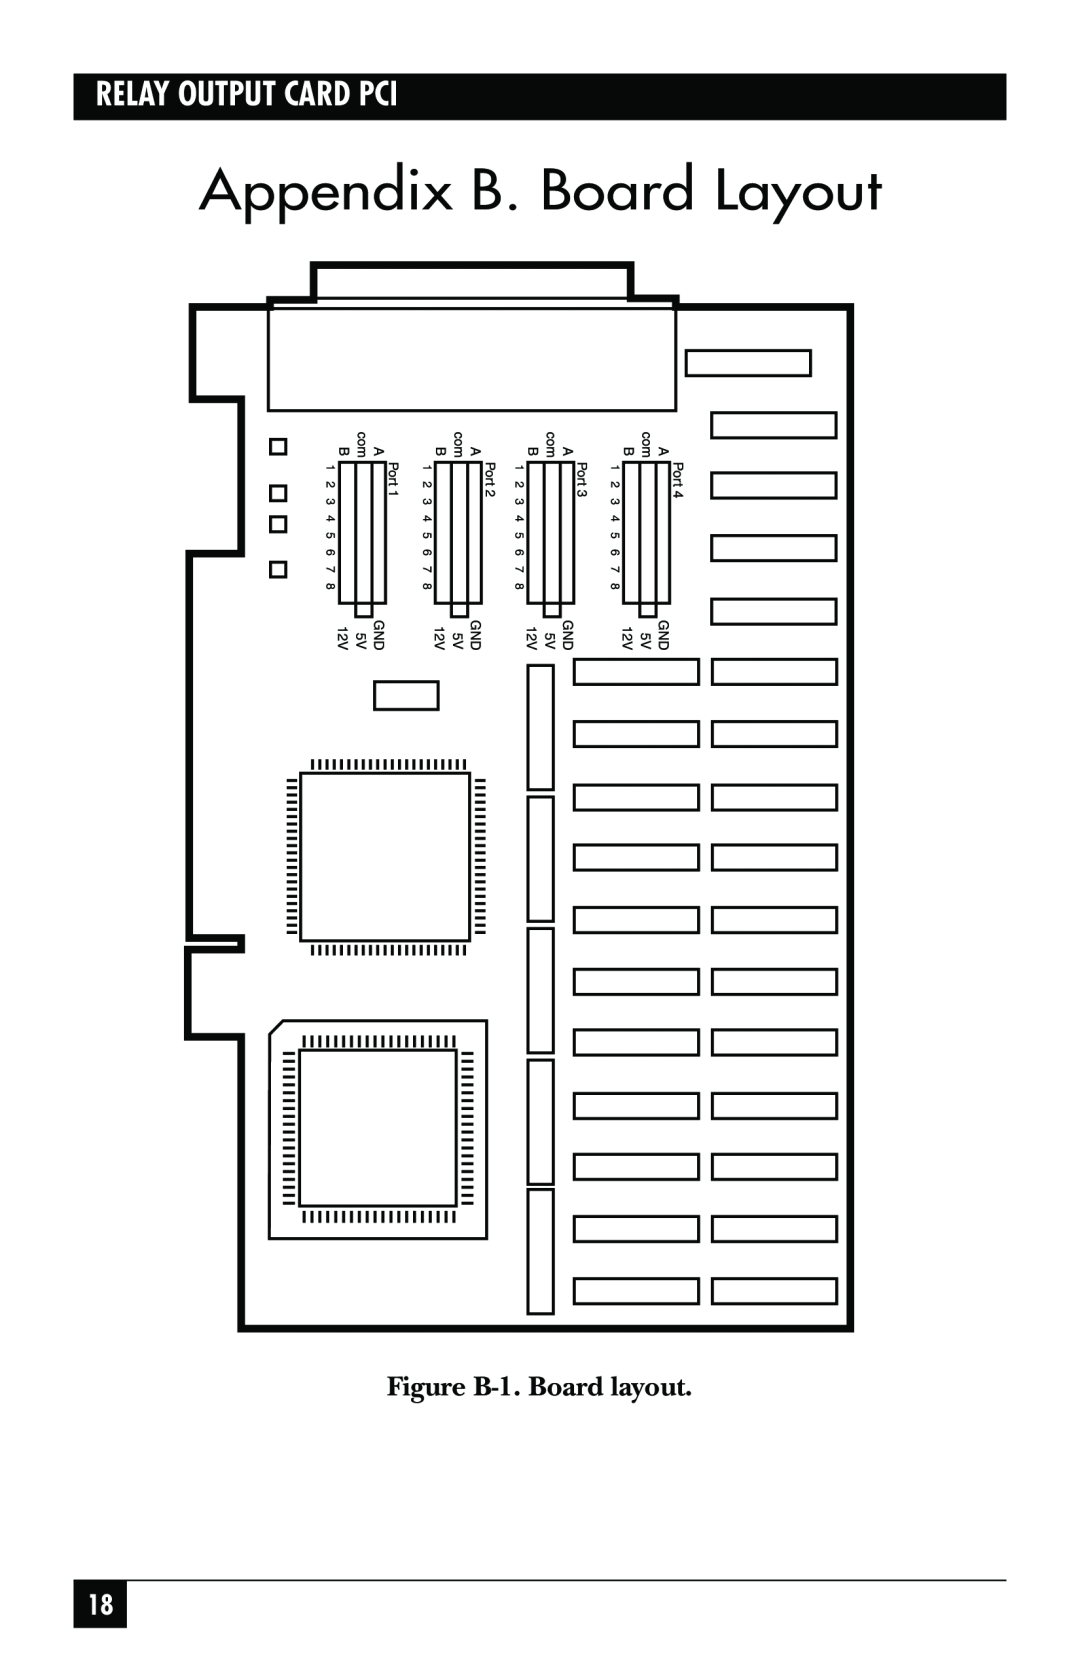 Black Box IC908C, IC907C manual Appendix B. Board Layout, Figure B-1.Board layout, Relay Output Card Pci 